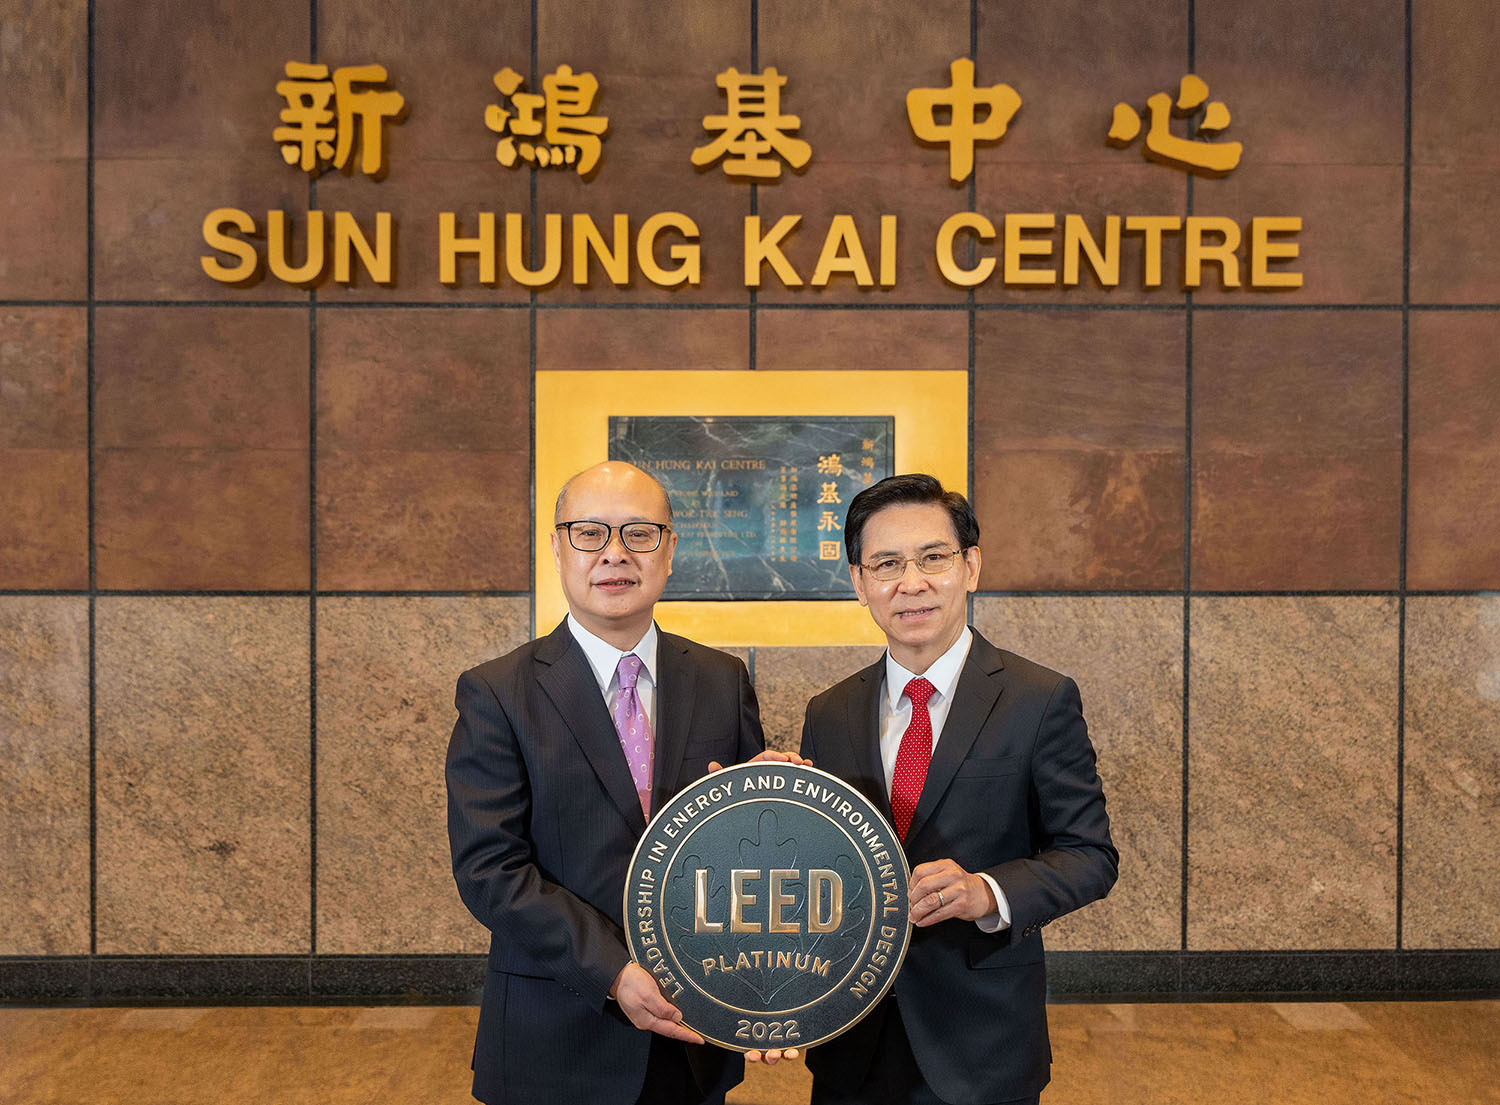 Sun Hung Kai Centre achieves the LEED Platinum certification